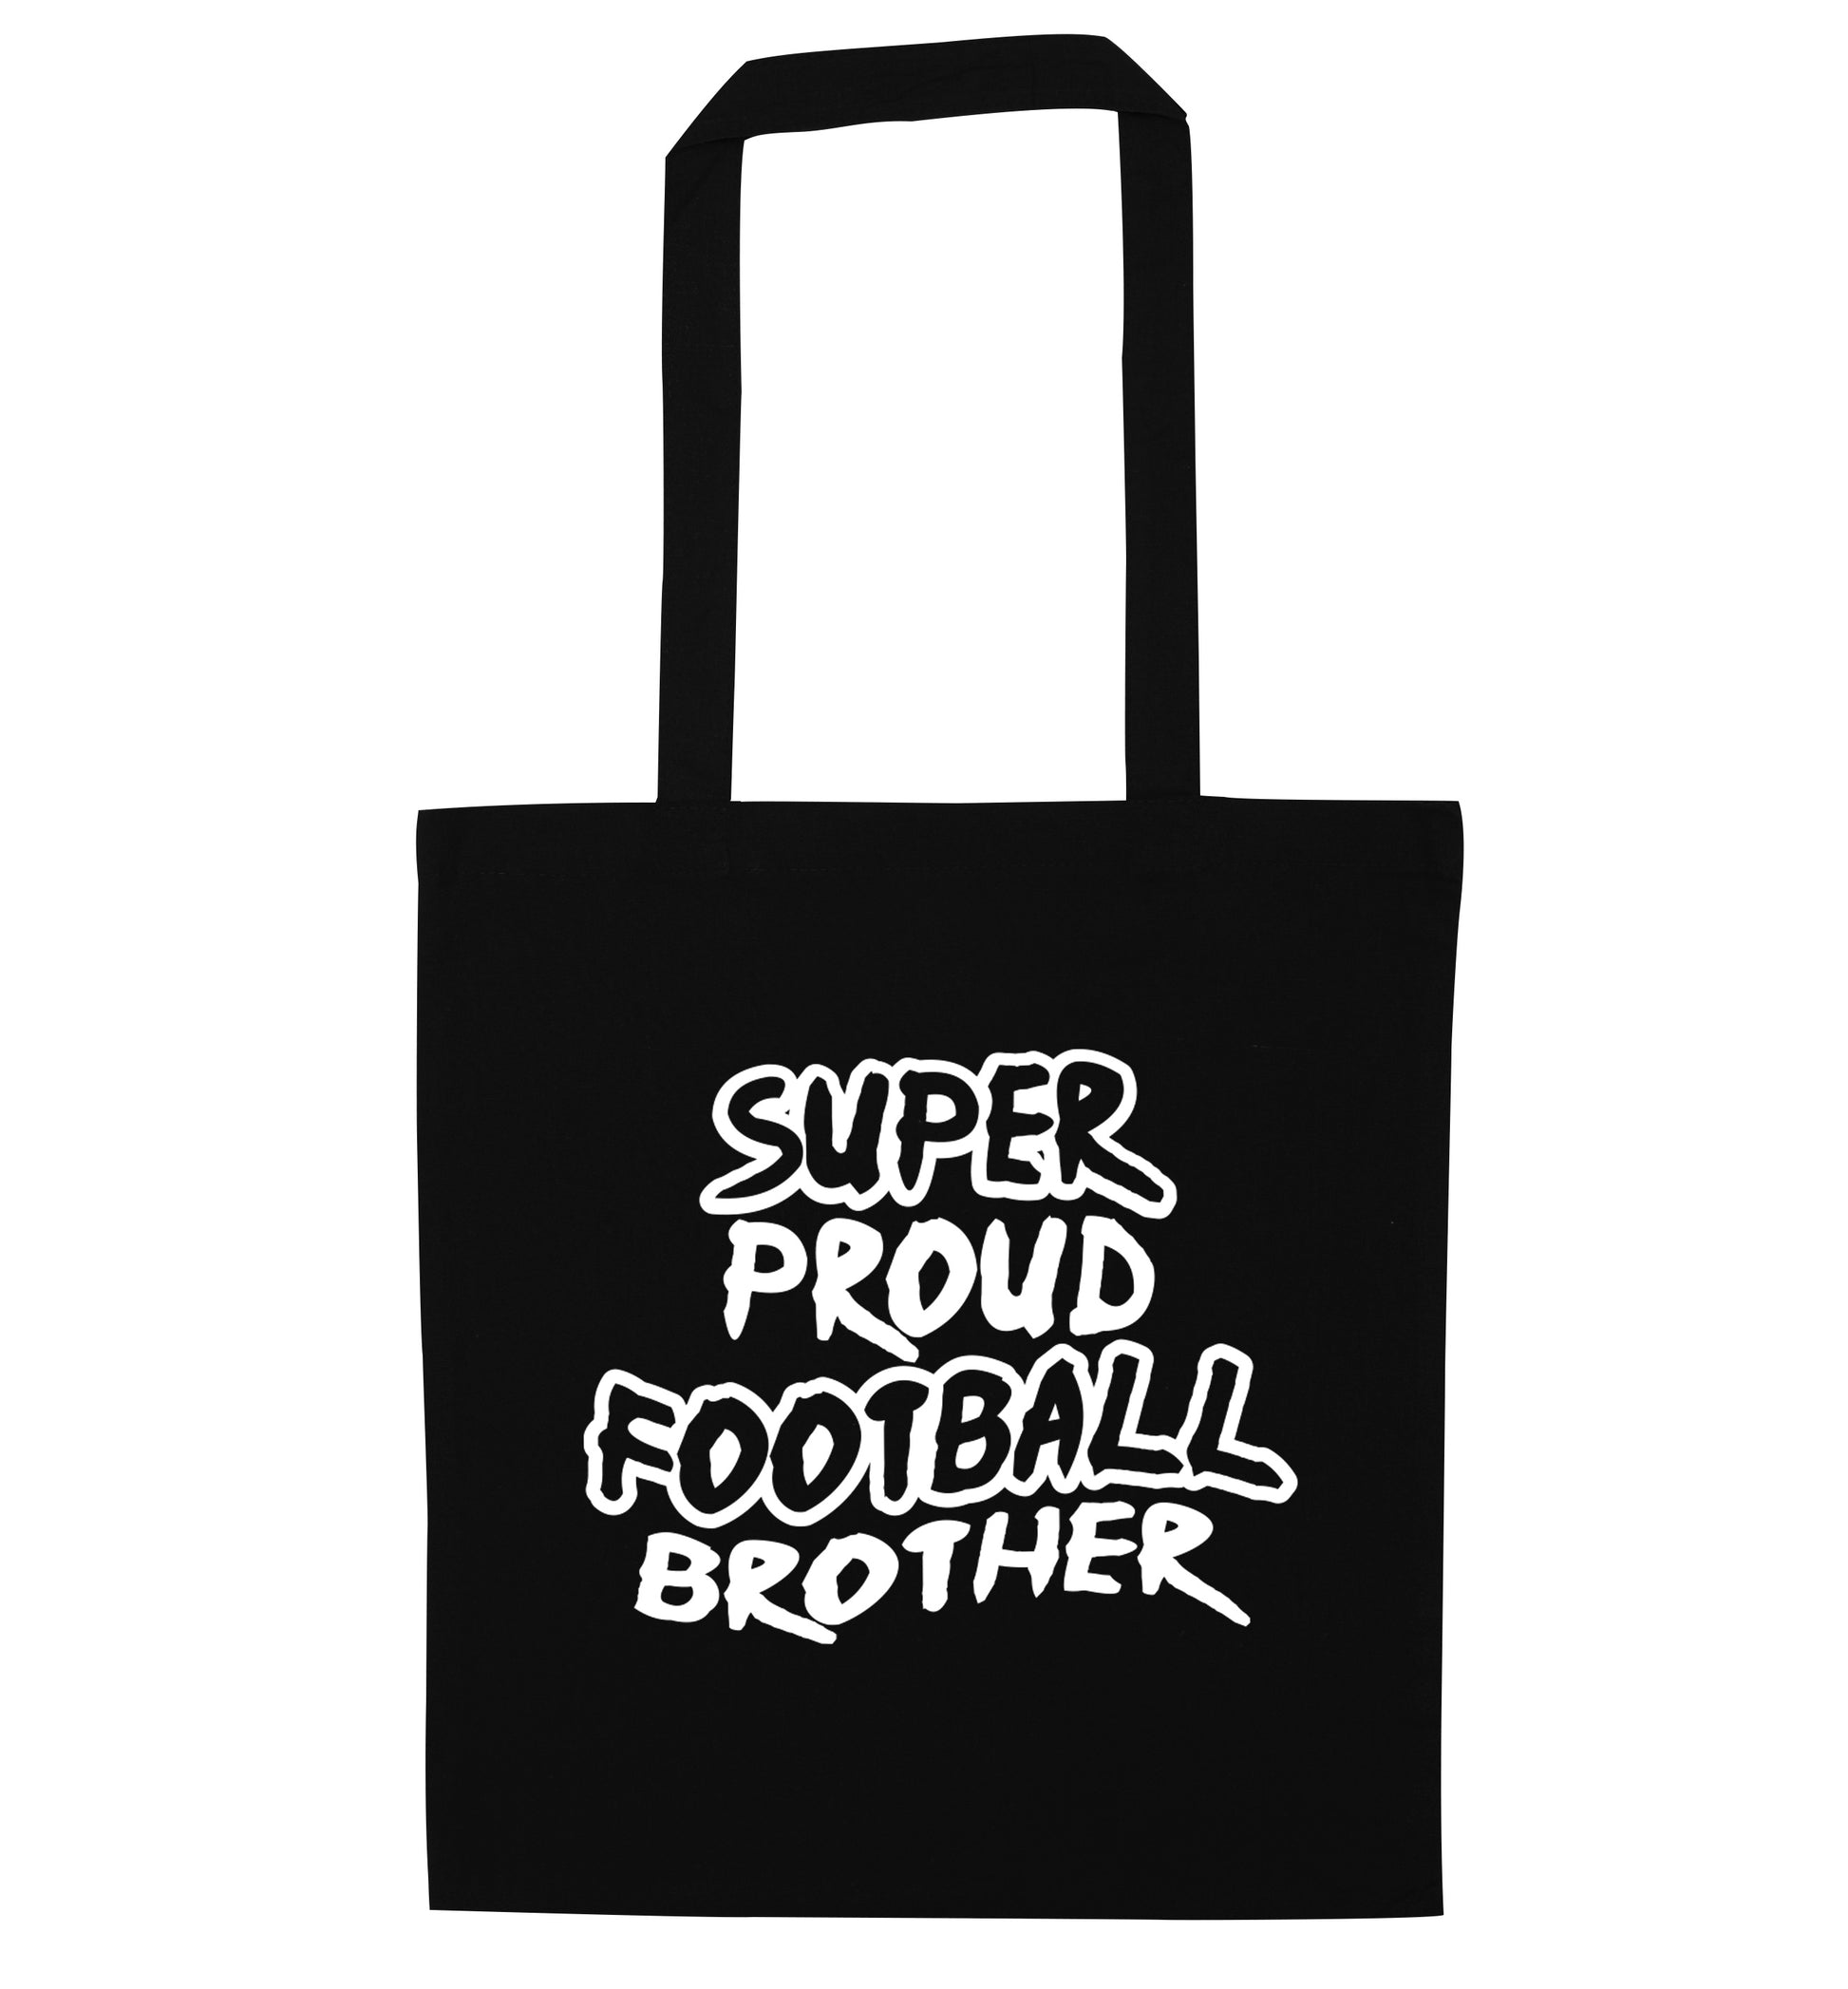 Super proud football brother black tote bag